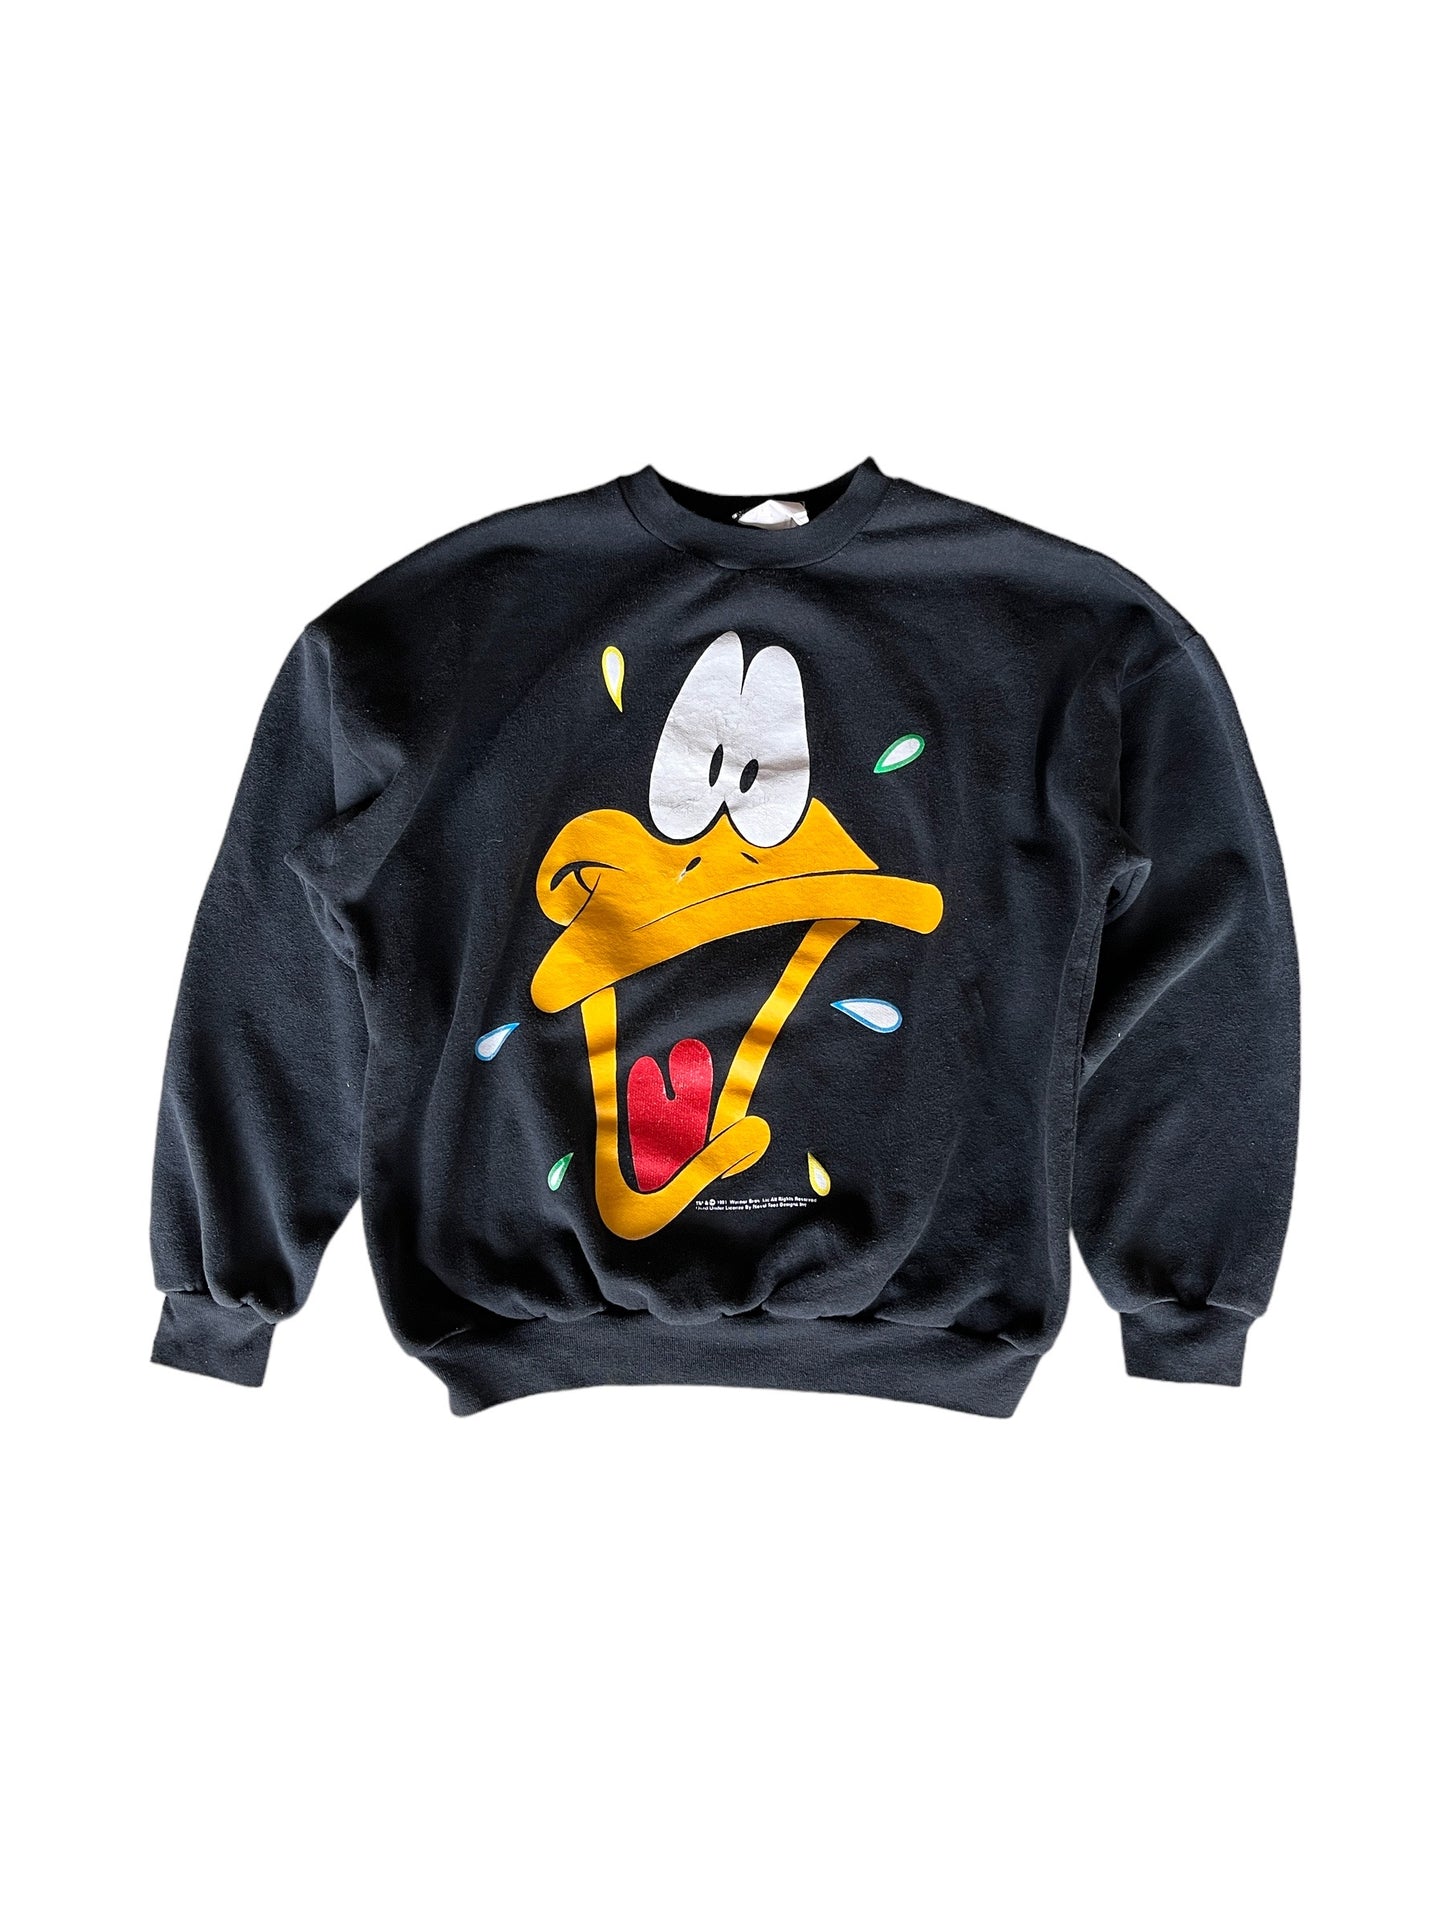 Vintage 90's Daffy Duck Sweater